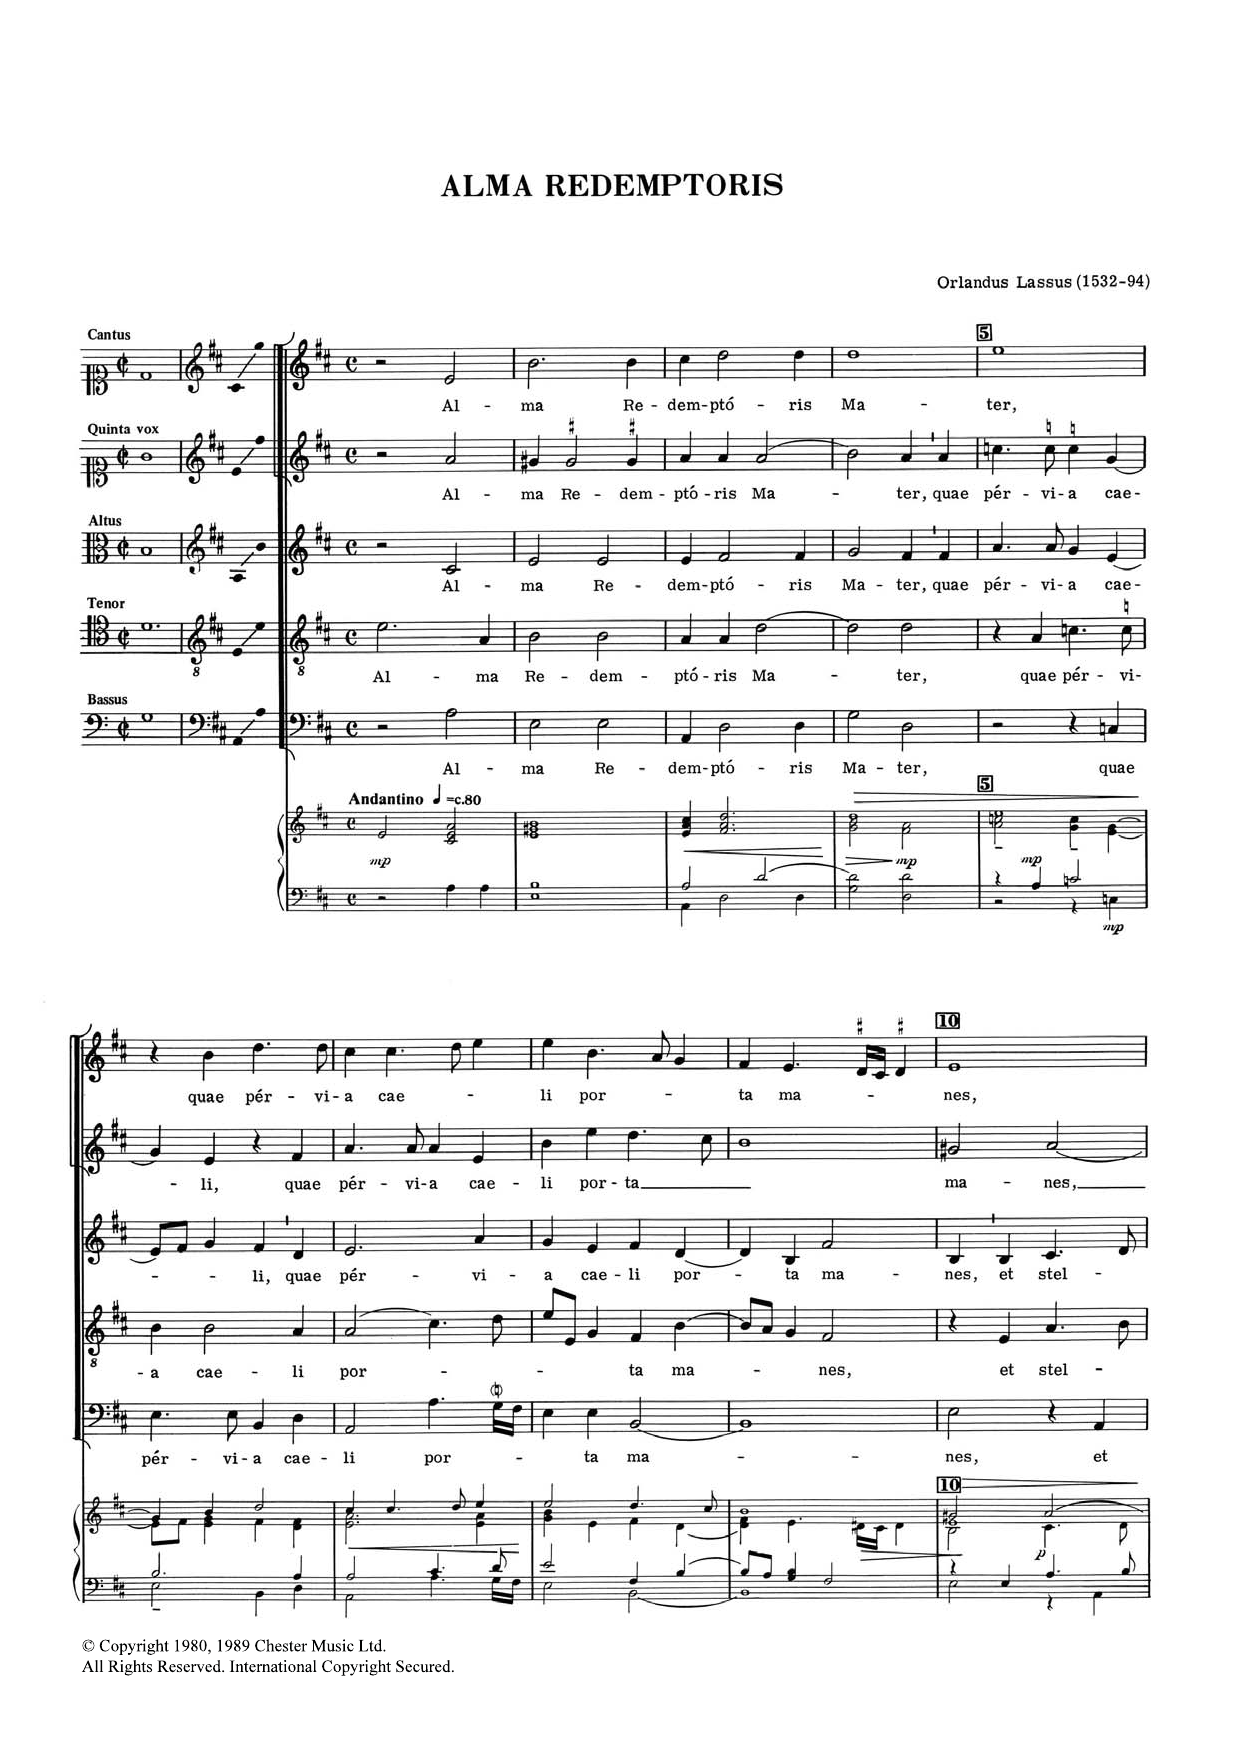 Orlandus Lassus Alma Redemptoris sheet music notes and chords arranged for SATB Choir